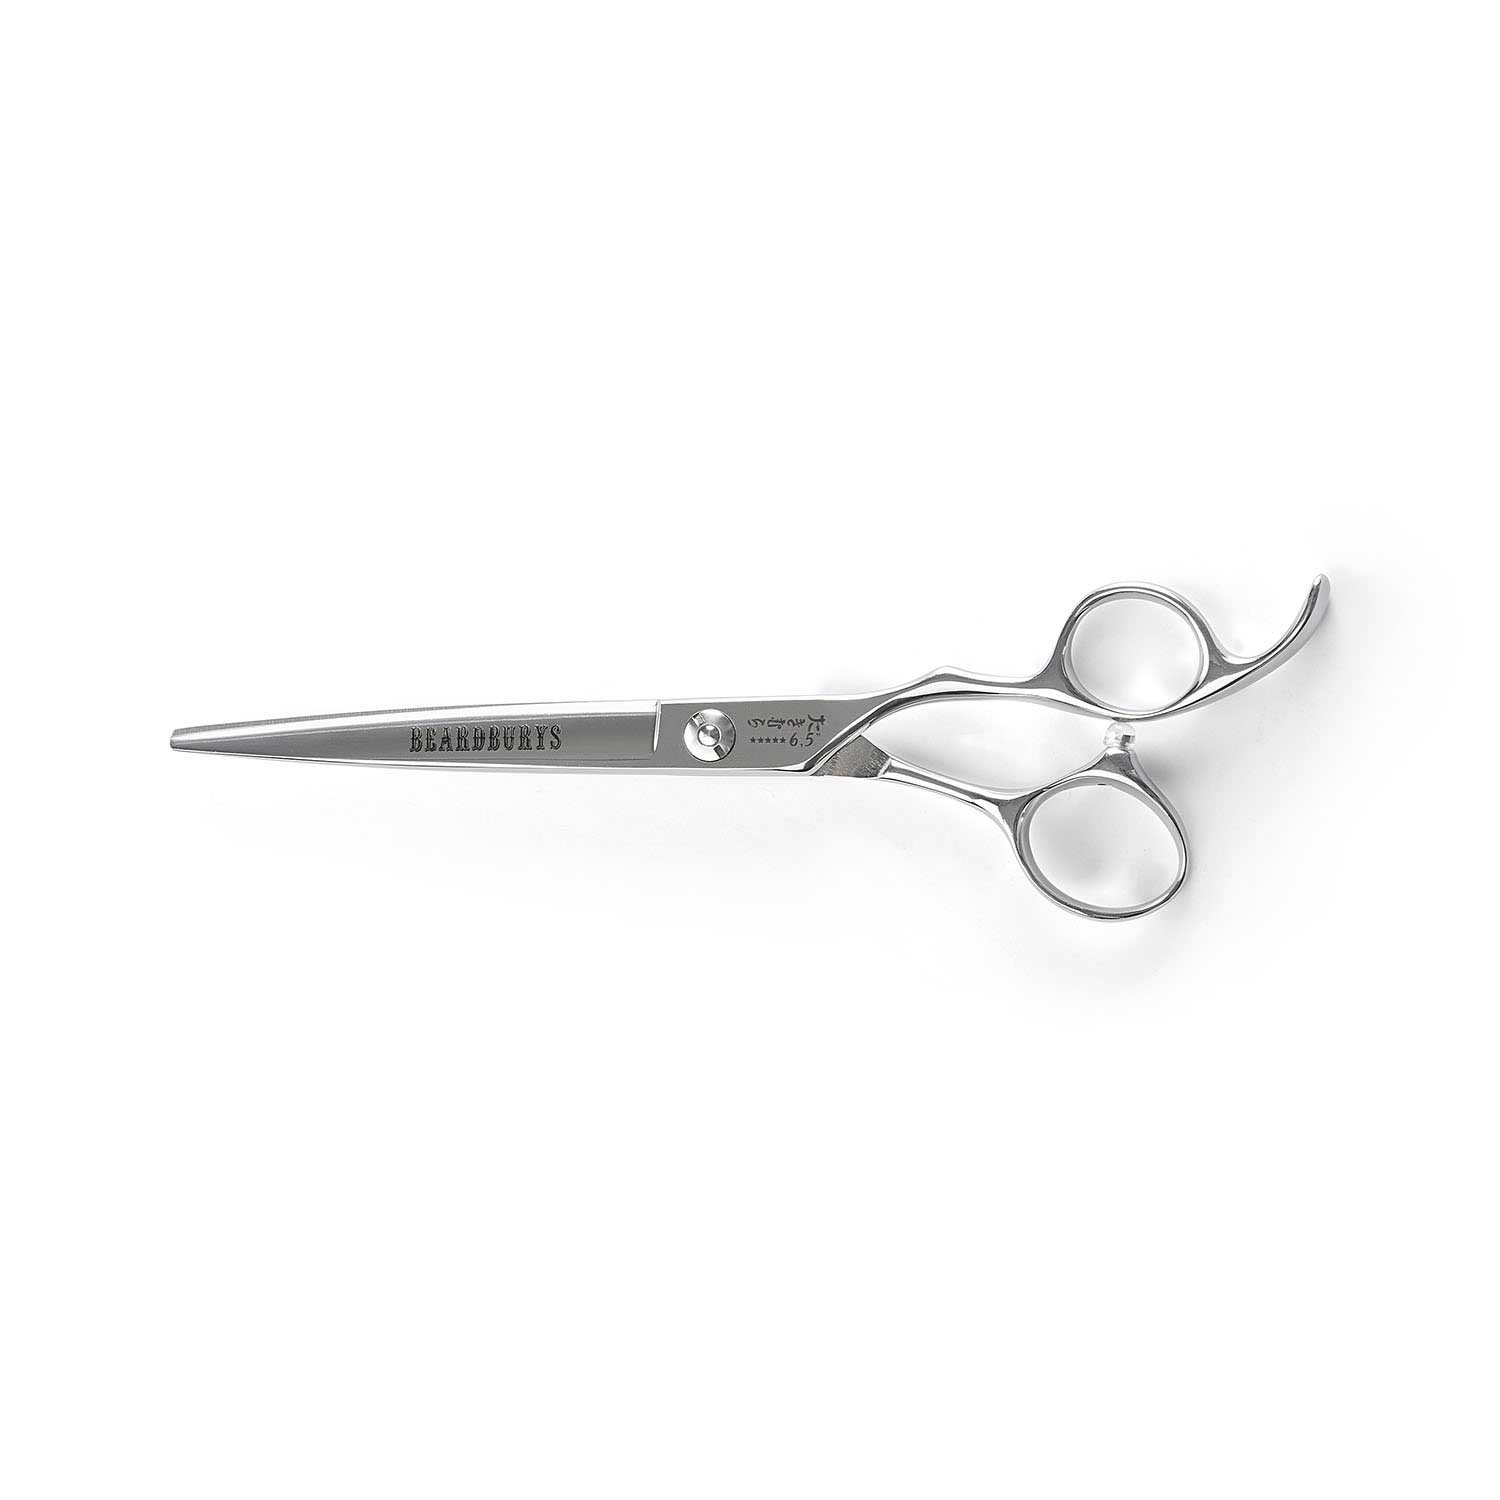 takimura-6-5-barber-scissors